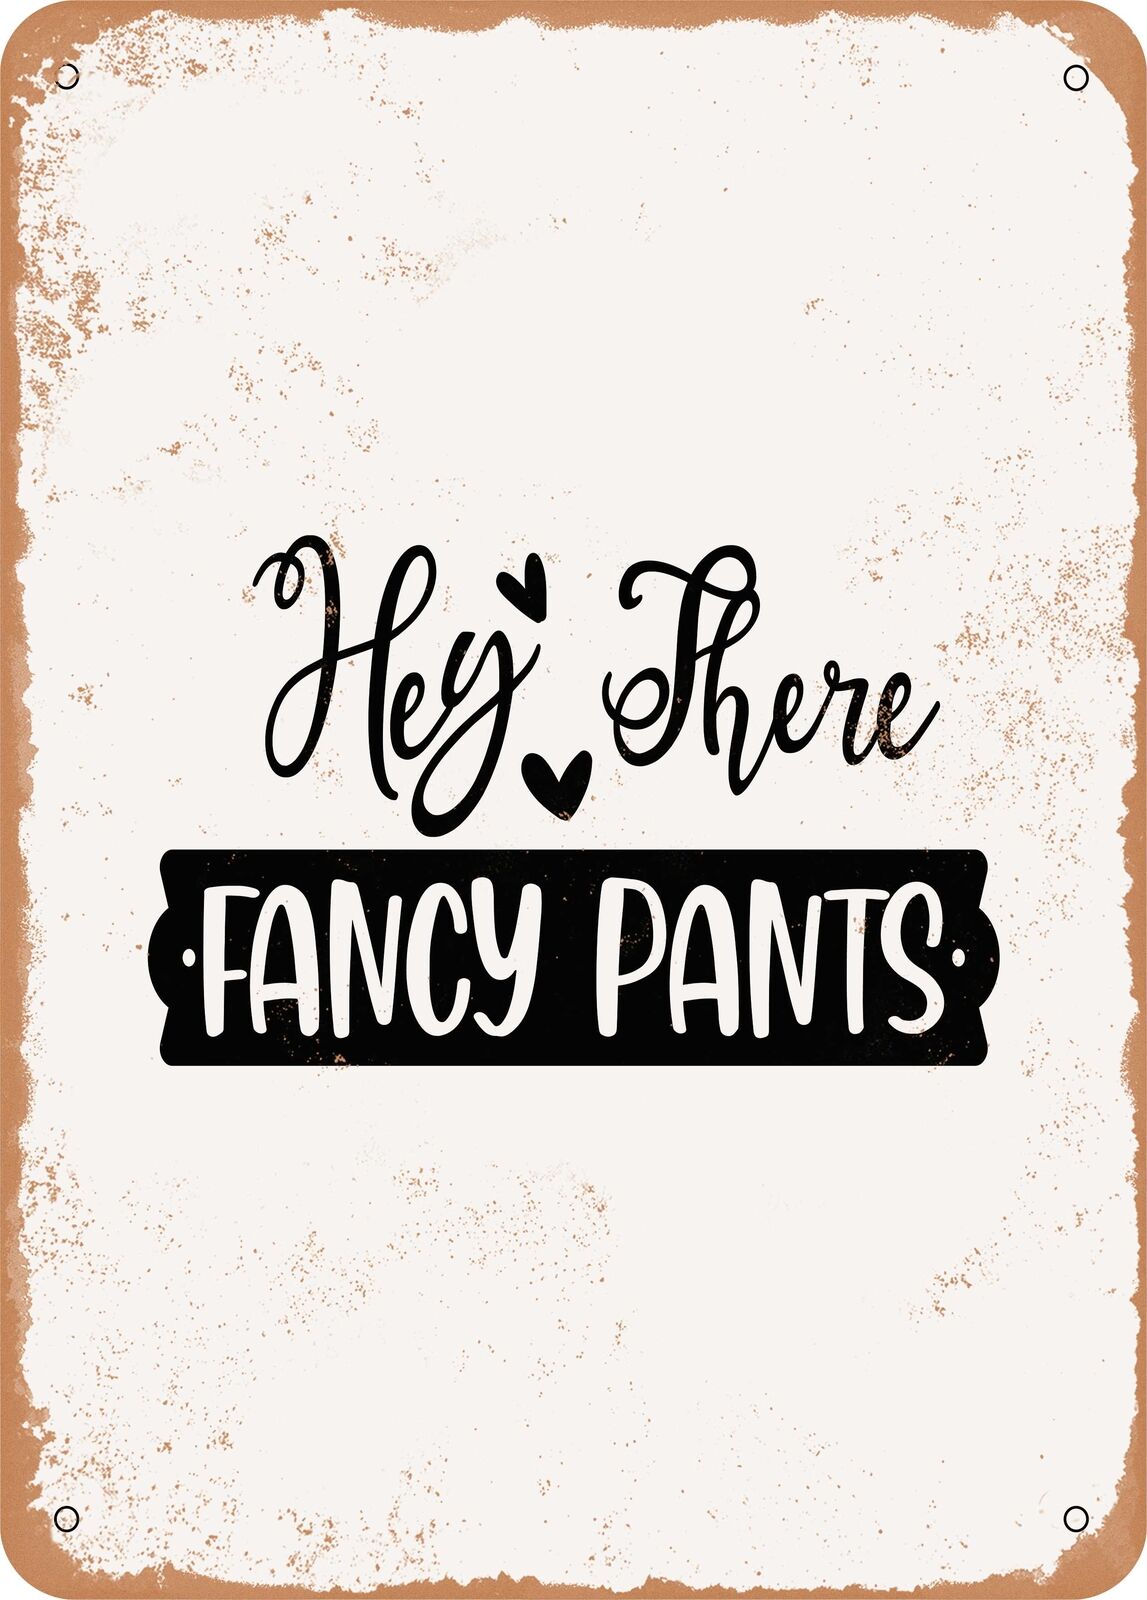 Metal Sign - Hey there Fancy Pants - Vintage Rusty Look